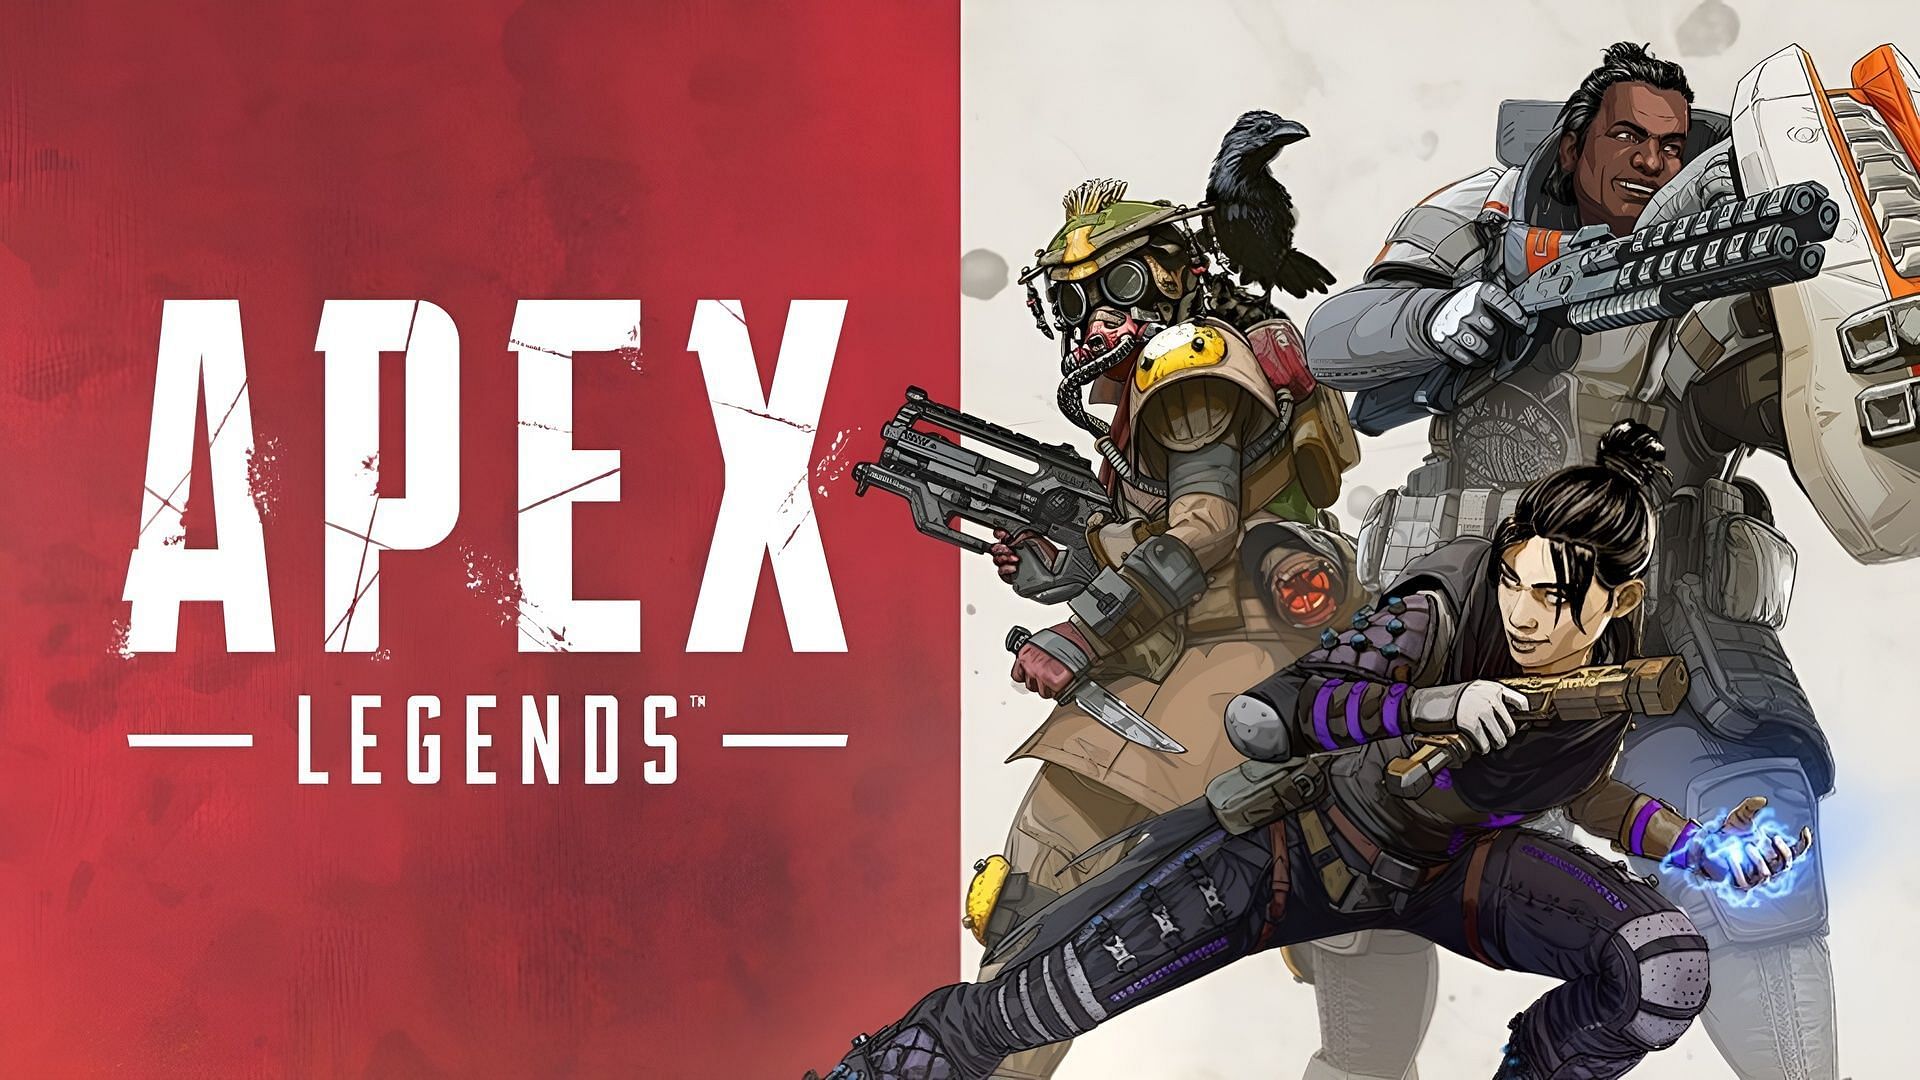 Apex Legends Cross-Progression Is Still Definitely Coming, Says